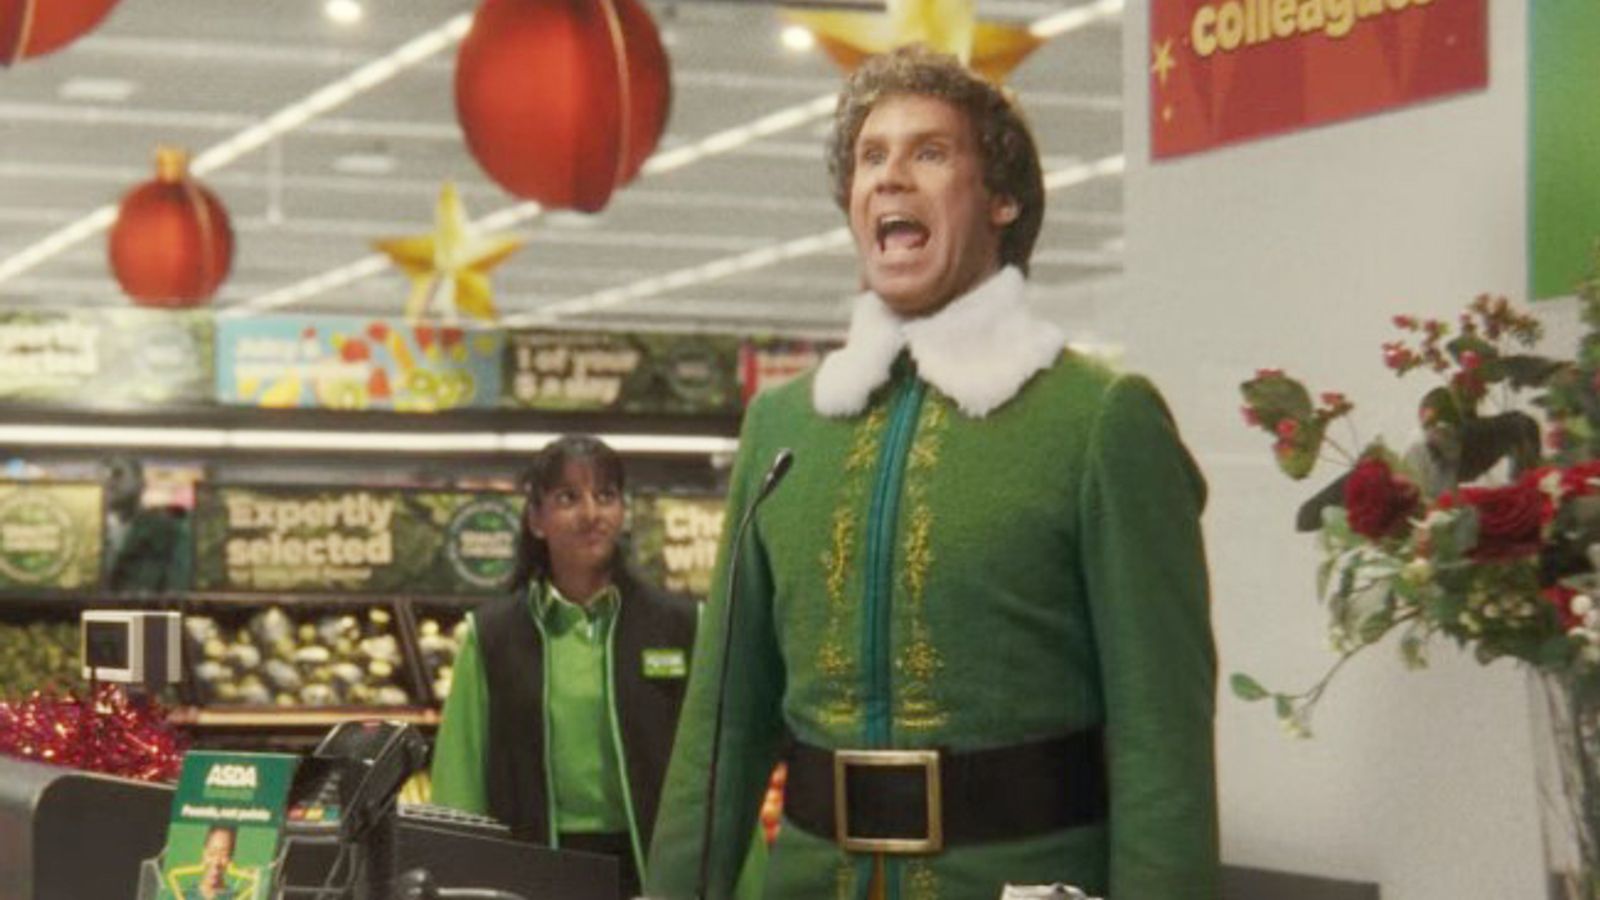 Will Ferrell stars as Buddy the Elf in Asda's Christmas advert Global